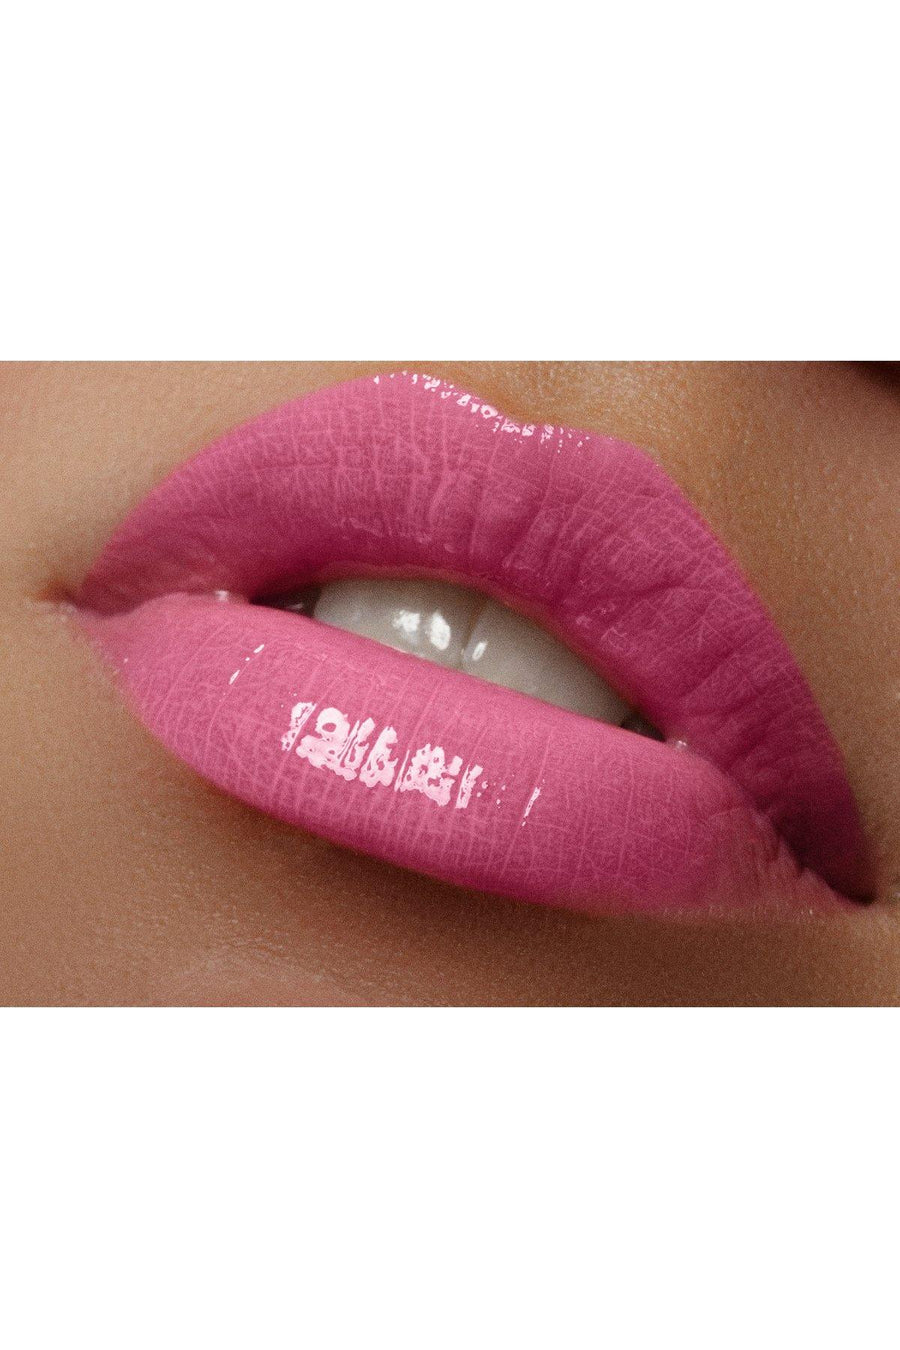 Lip Gloss #7 - Pink Pop - Blend Mineral Cosmetics